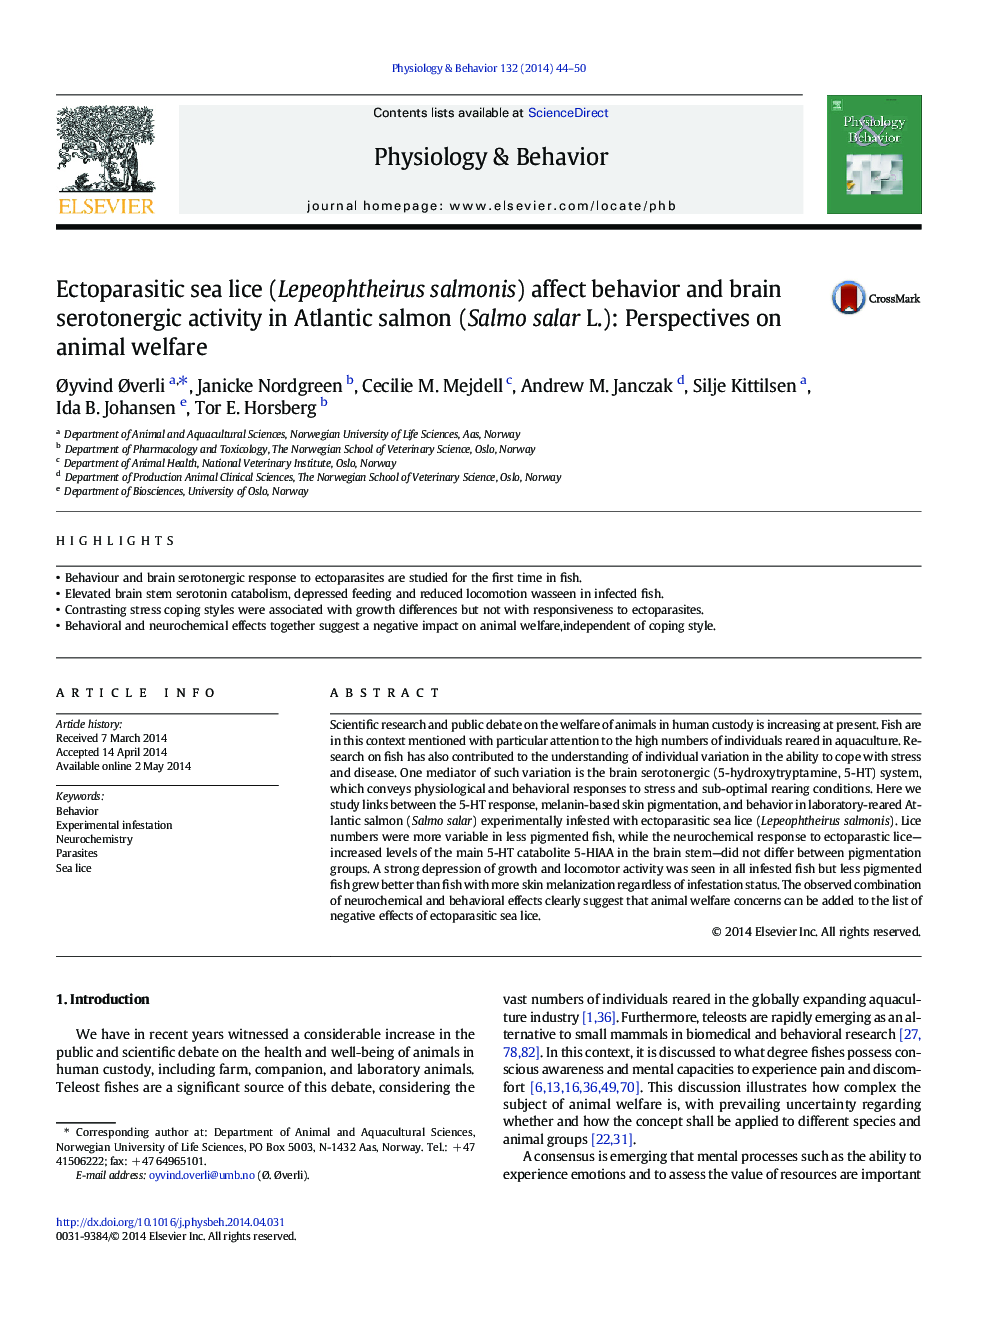 Ectoparasitic sea lice (Lepeophtheirus salmonis) affect behavior and brain serotonergic activity in Atlantic salmon (Salmo salar L.): Perspectives on animal welfare